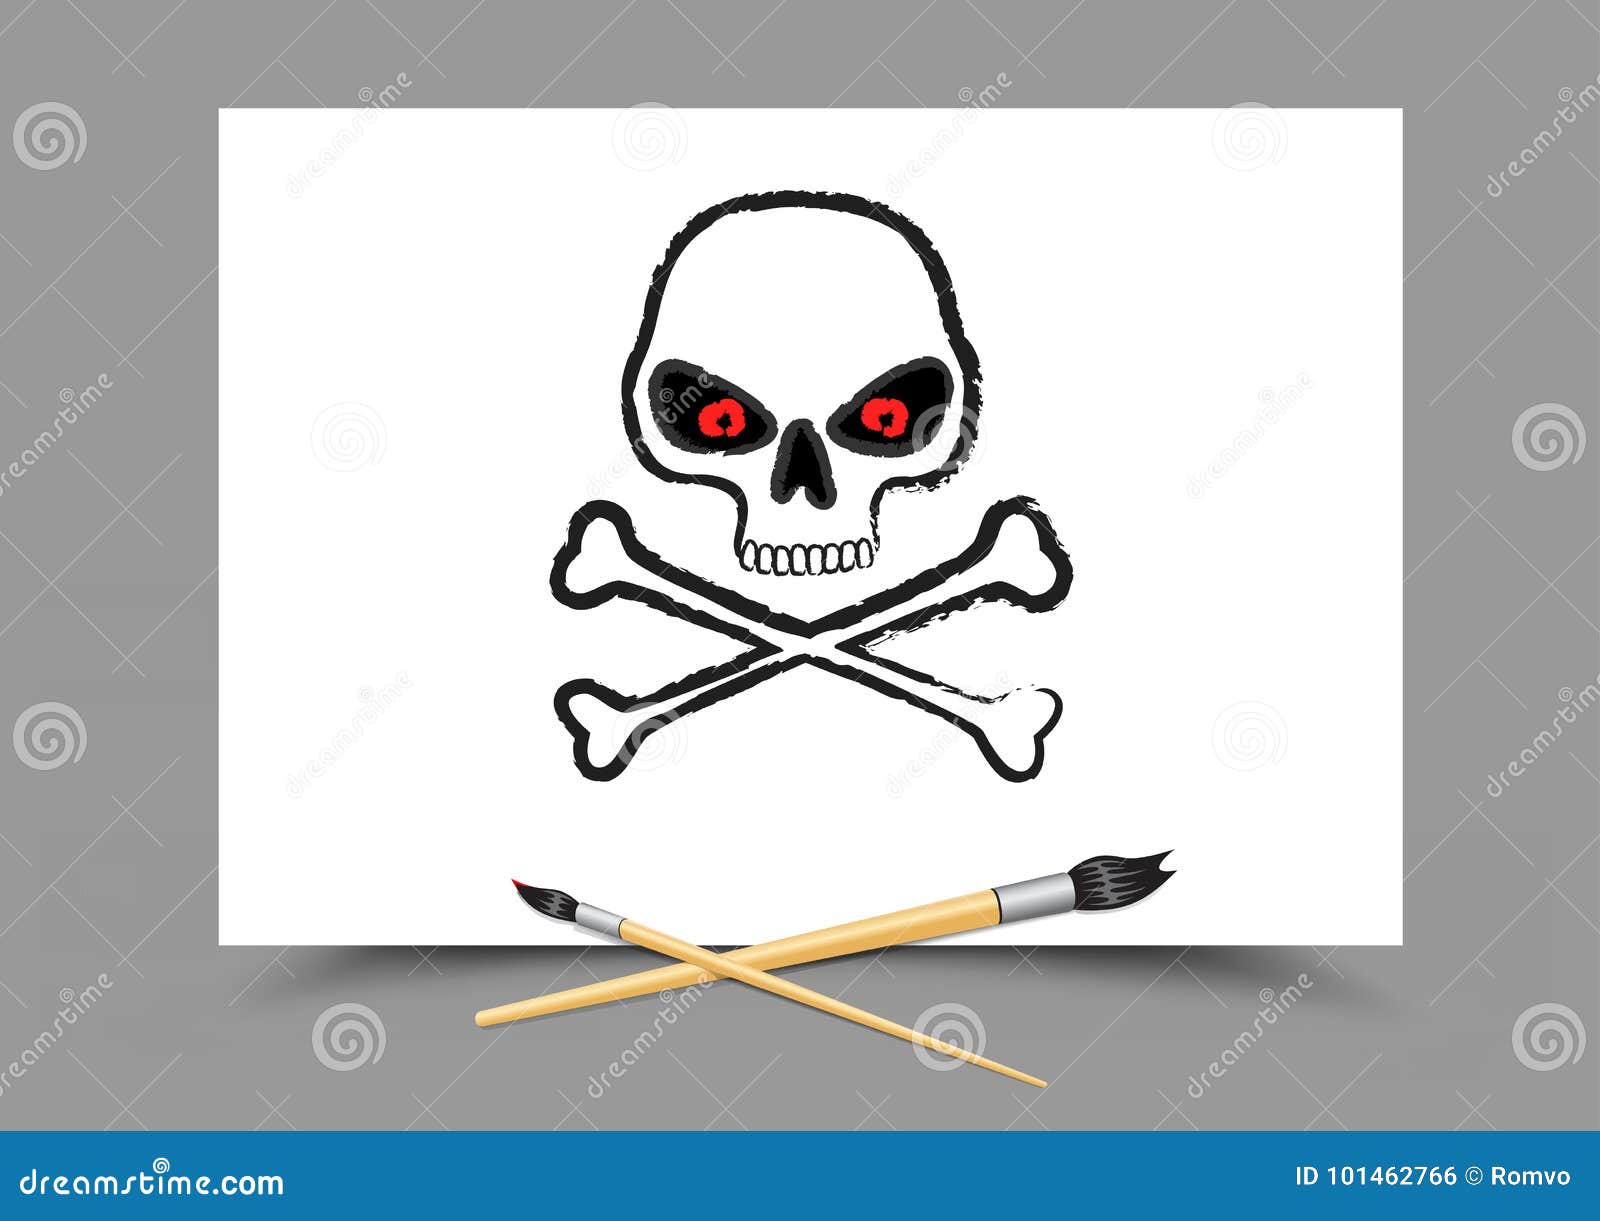 Drawing Of Danger Warning Signs Stock Illustrations RoyaltyFree Vector  Graphics  Clip Art  iStock